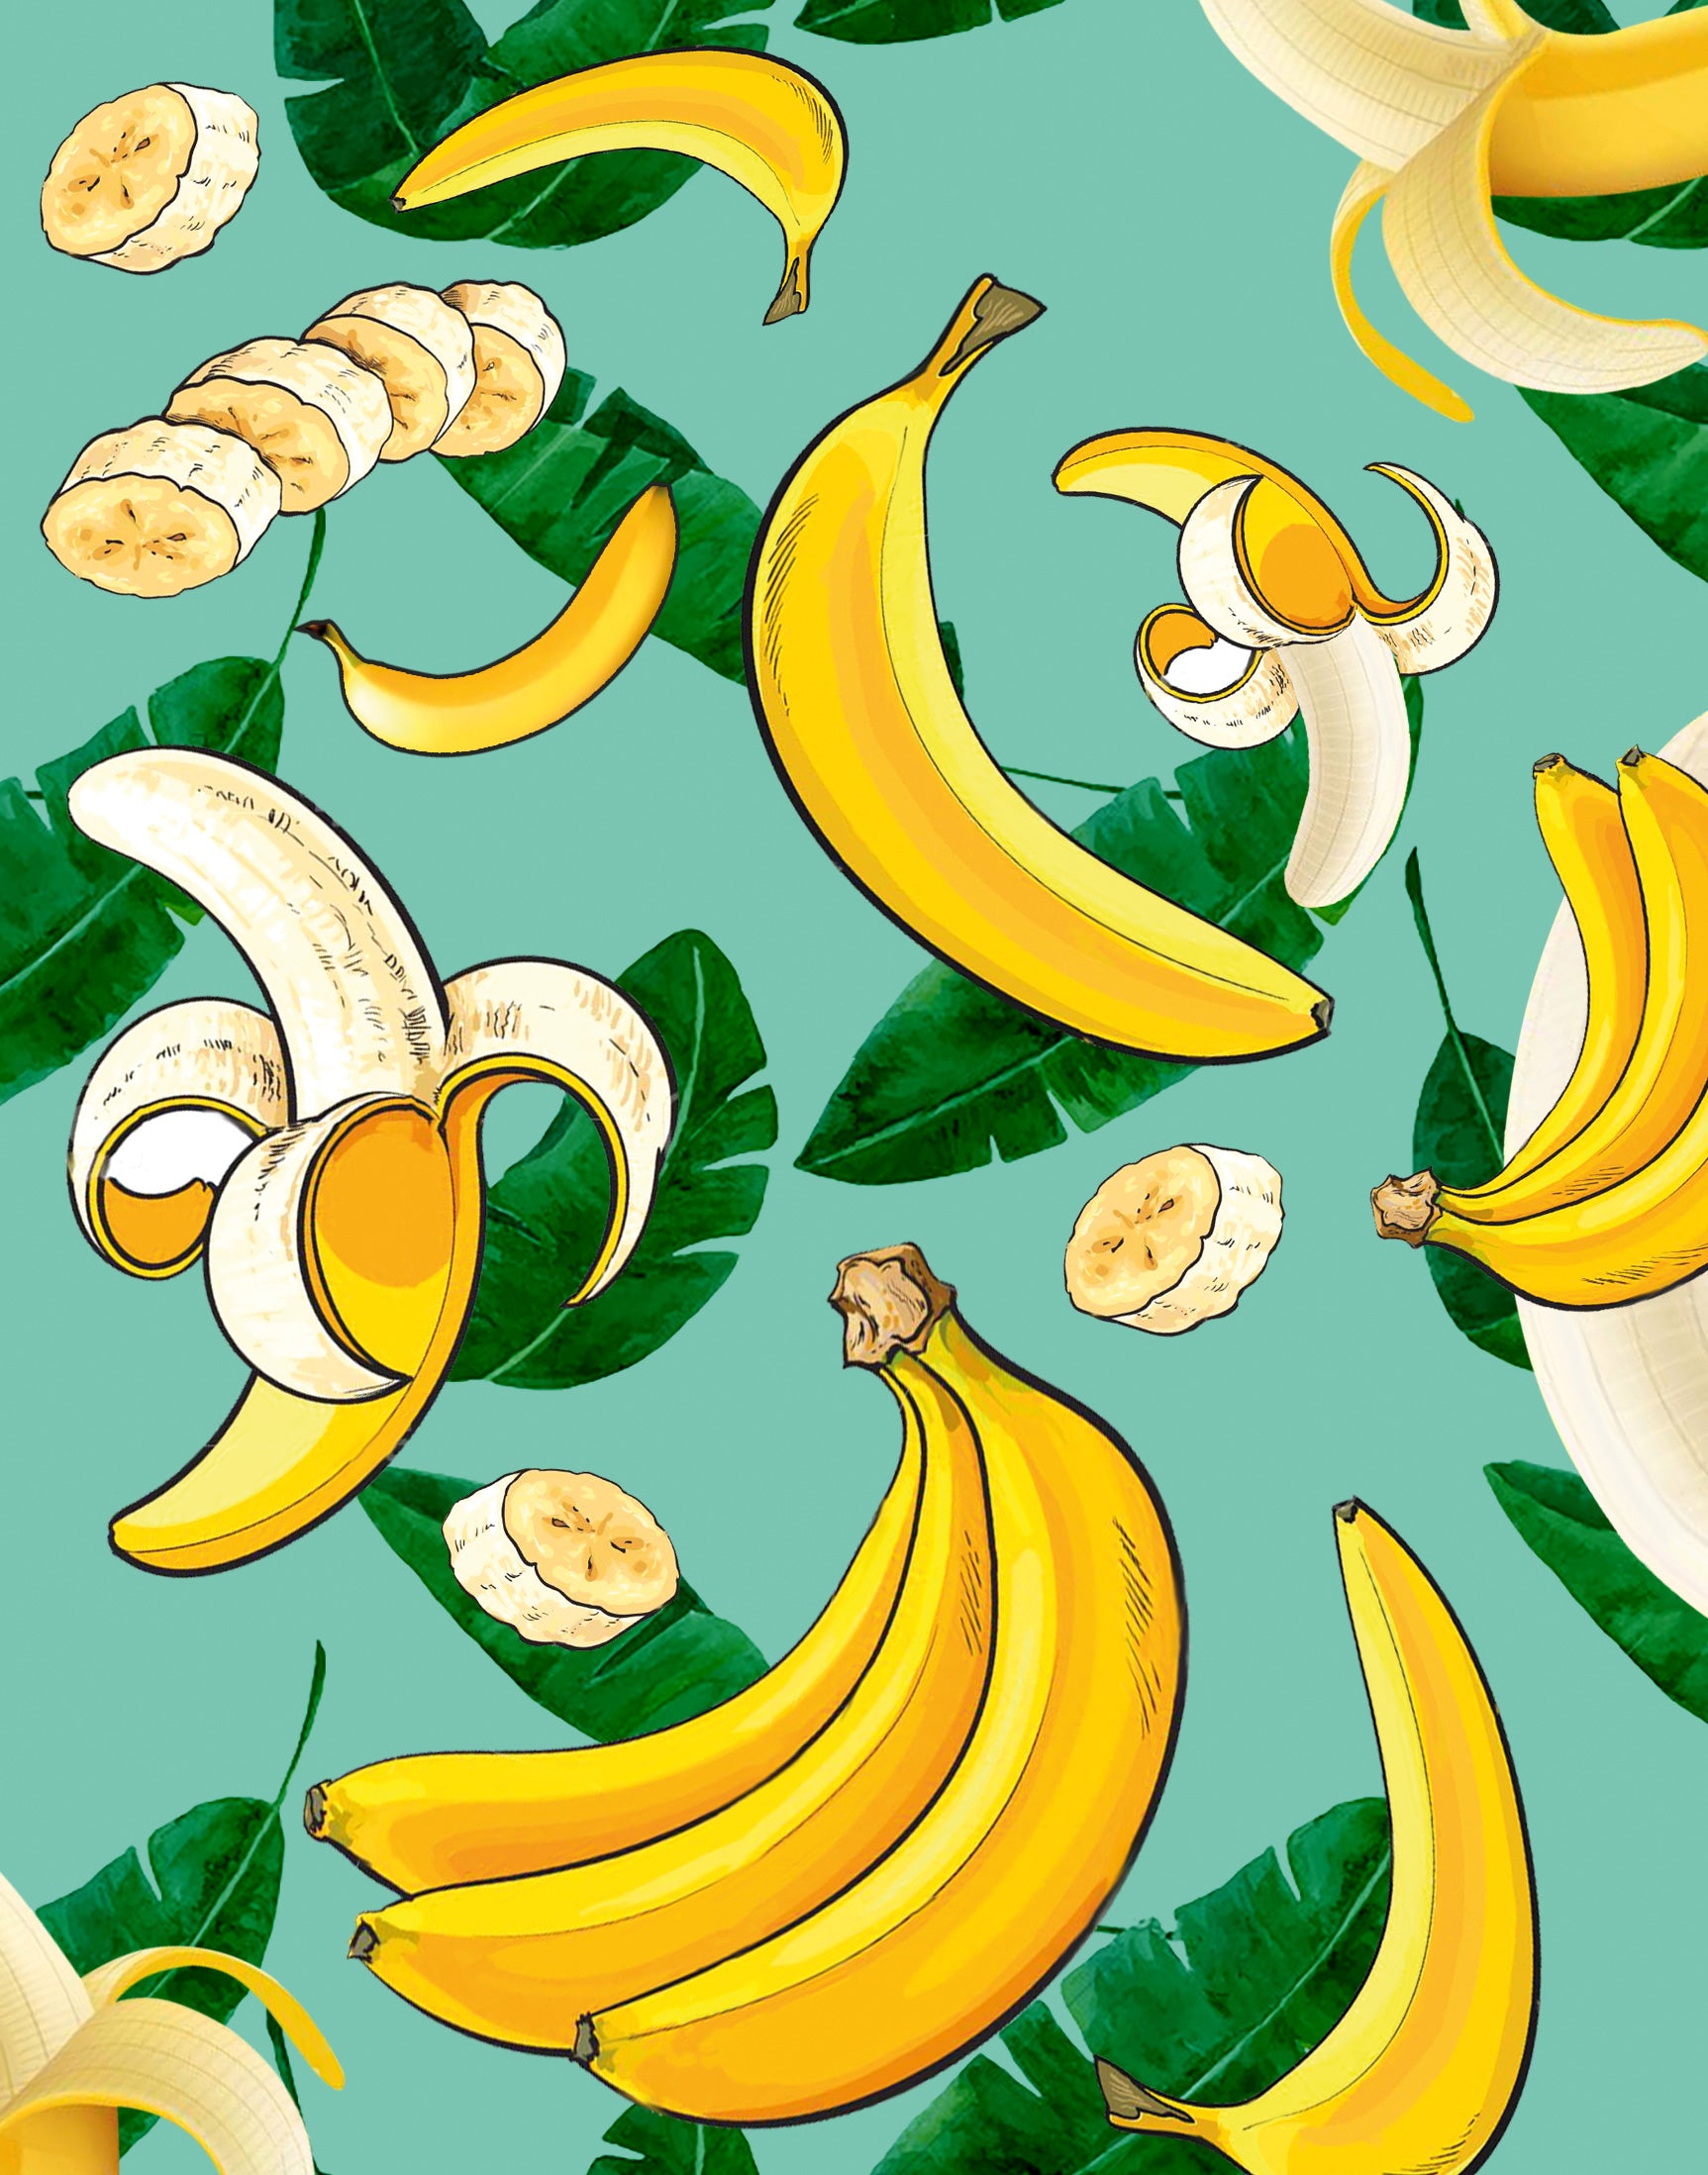 Banana - Puzzleyourpet